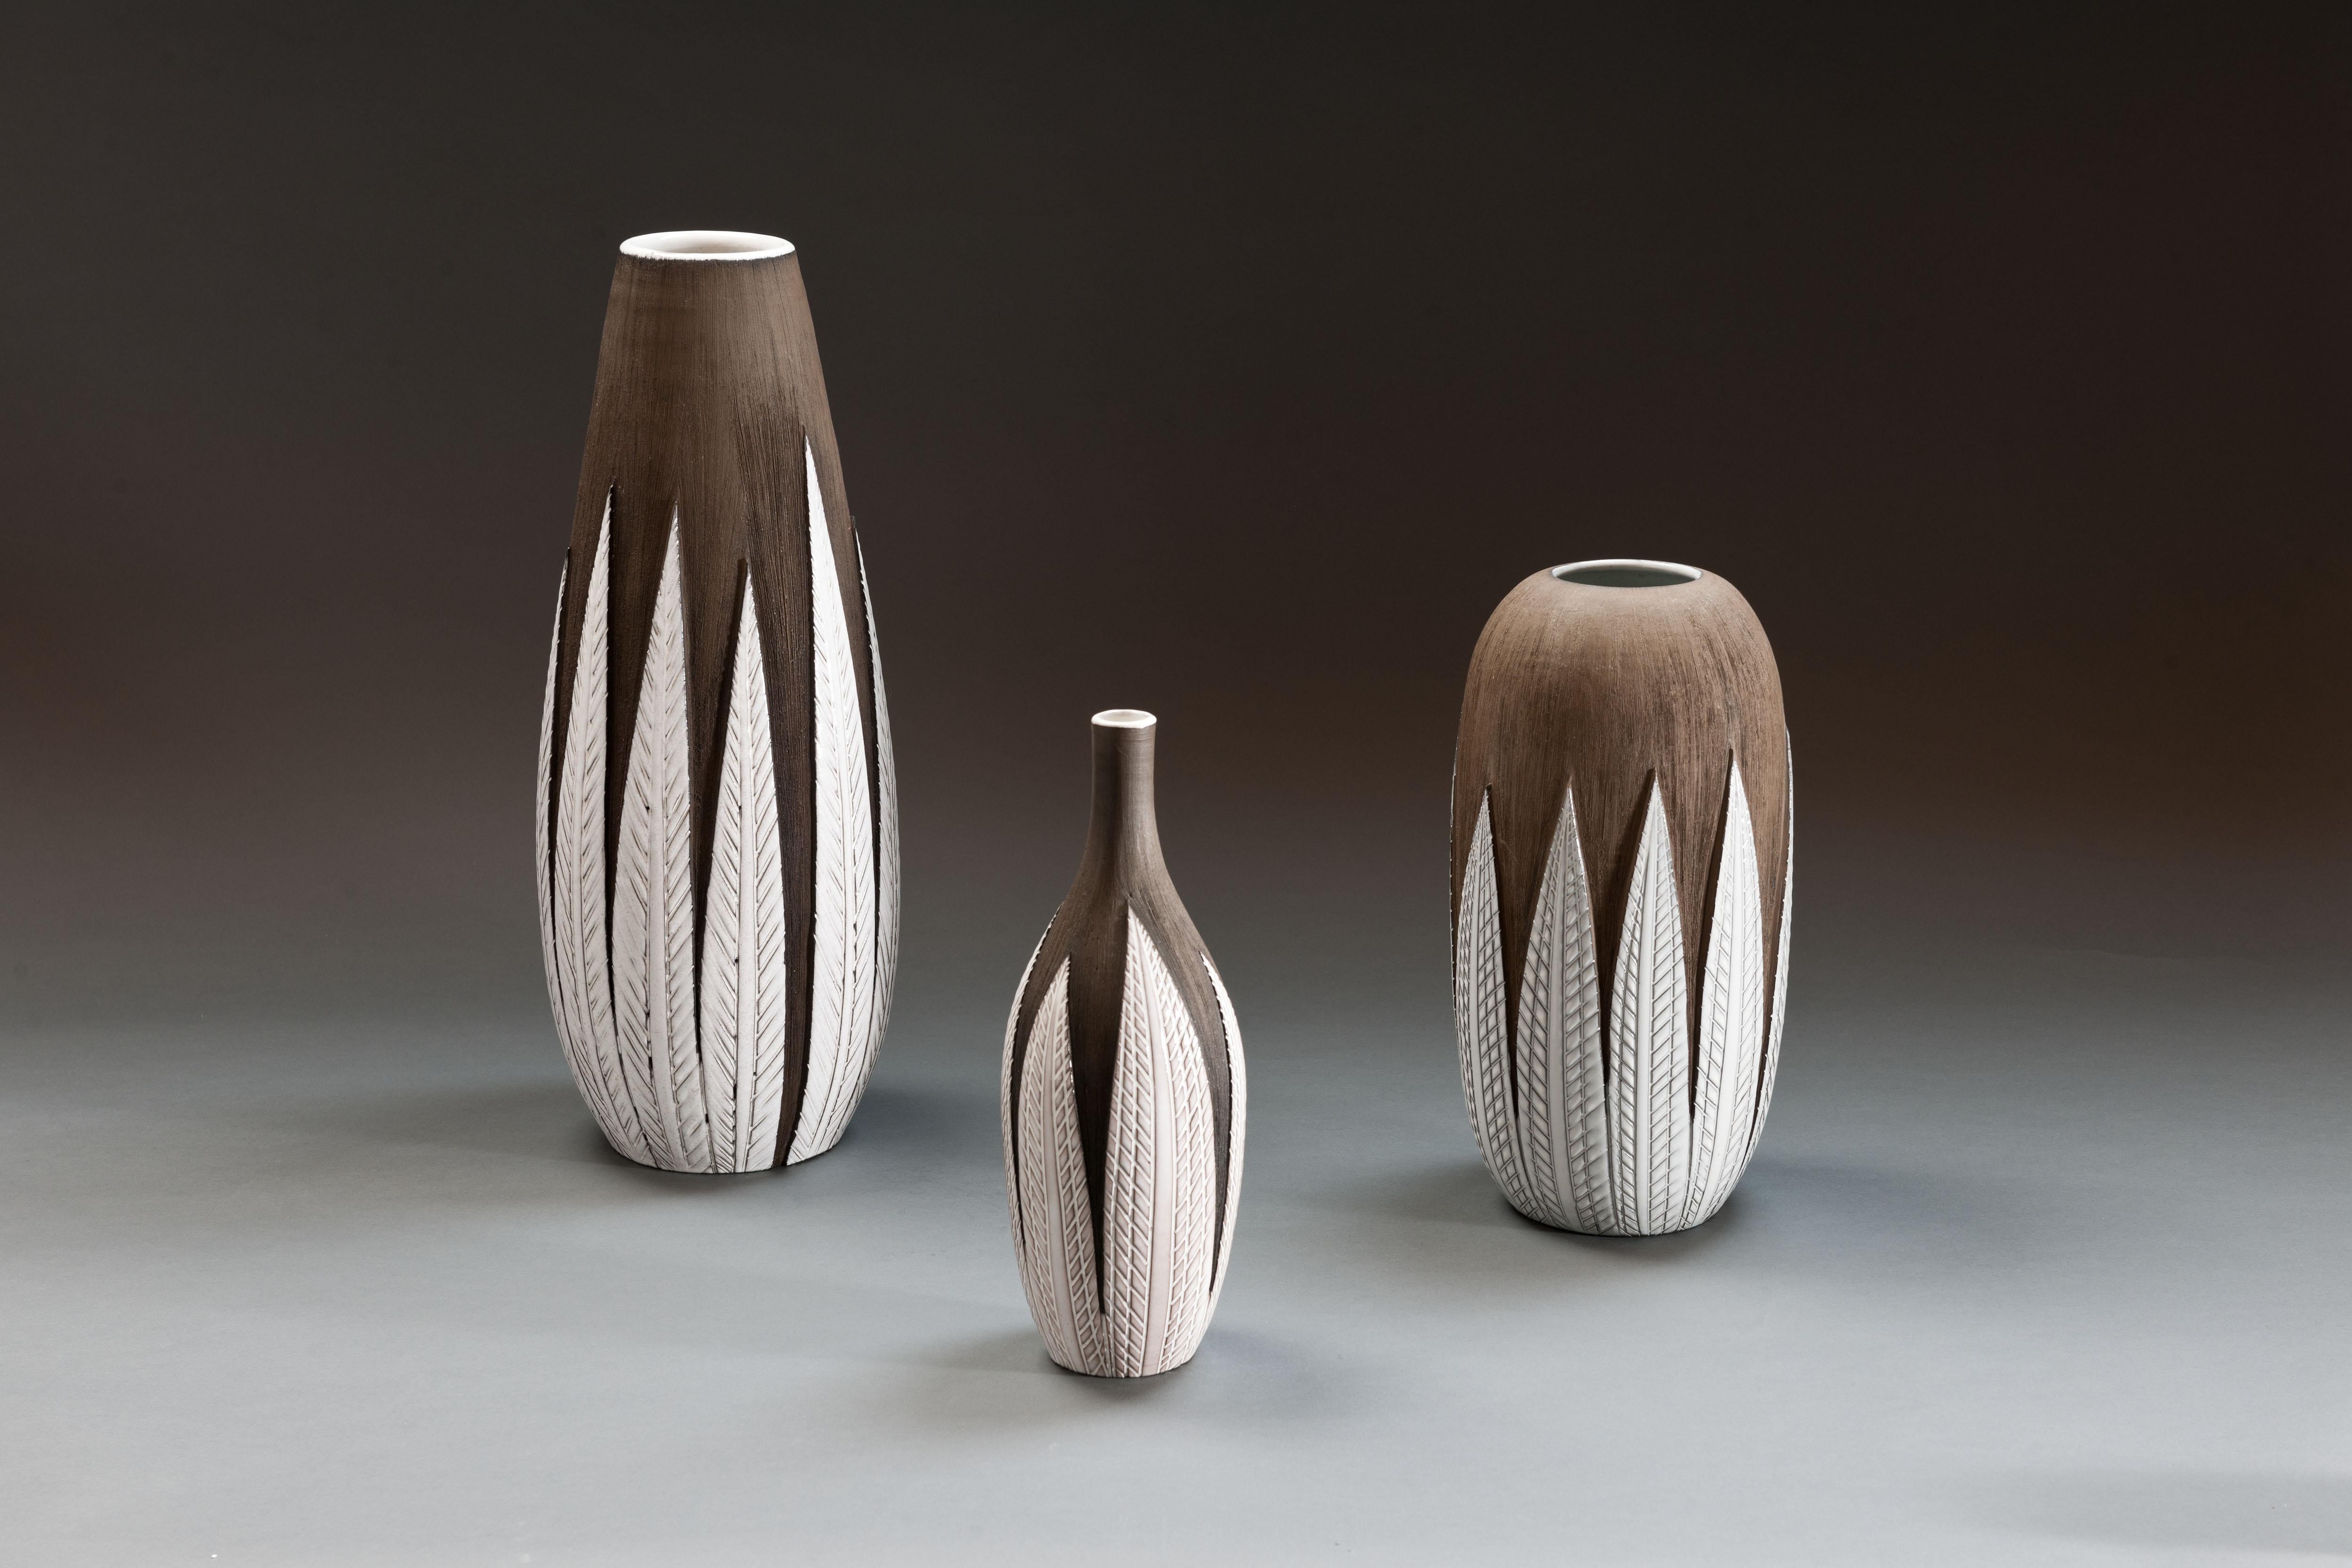 Set of 3 large vintage ceramic 'Paprika' vases by Swedish designer Anna-Lisa Thomson. Unglazed dark brown textured ceramic covered with contrasting glazed leaves.

Thomson designed the 'Paprika series' in 1948-51 for the ceramics company Upsala